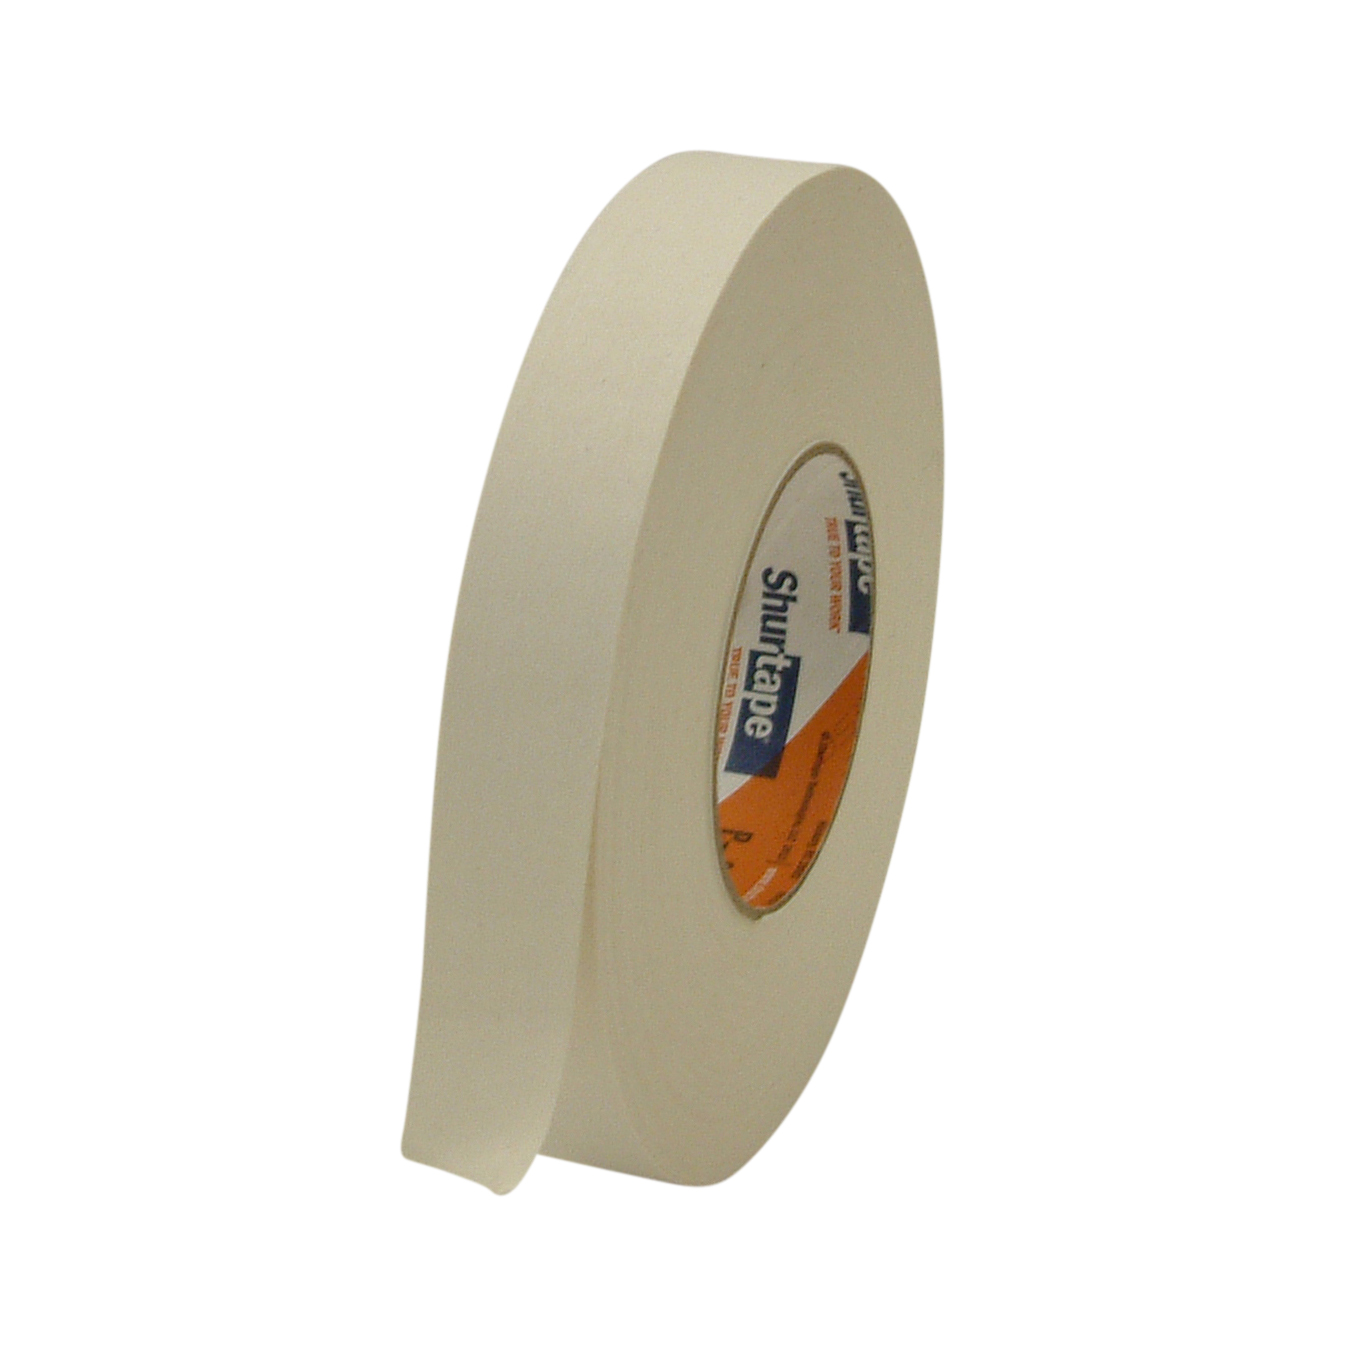 Shurtape P-68 Ultra Premium Grade Cloth Gaffers Tape